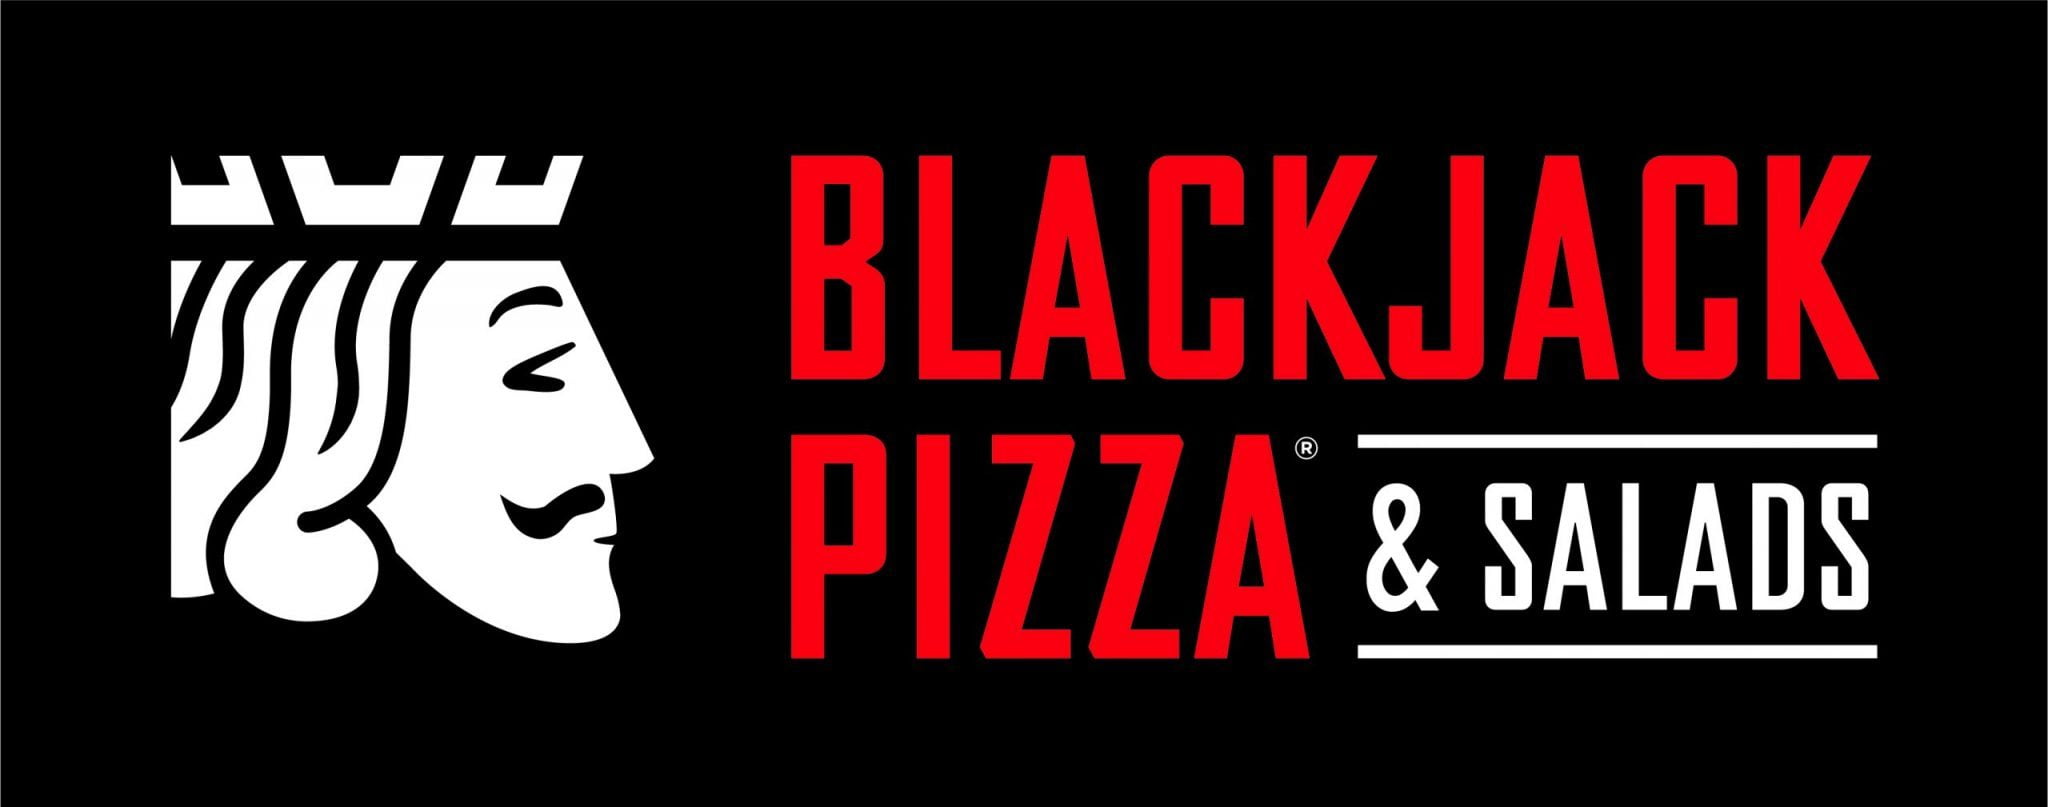 Black Jack Pizza Littleton Co